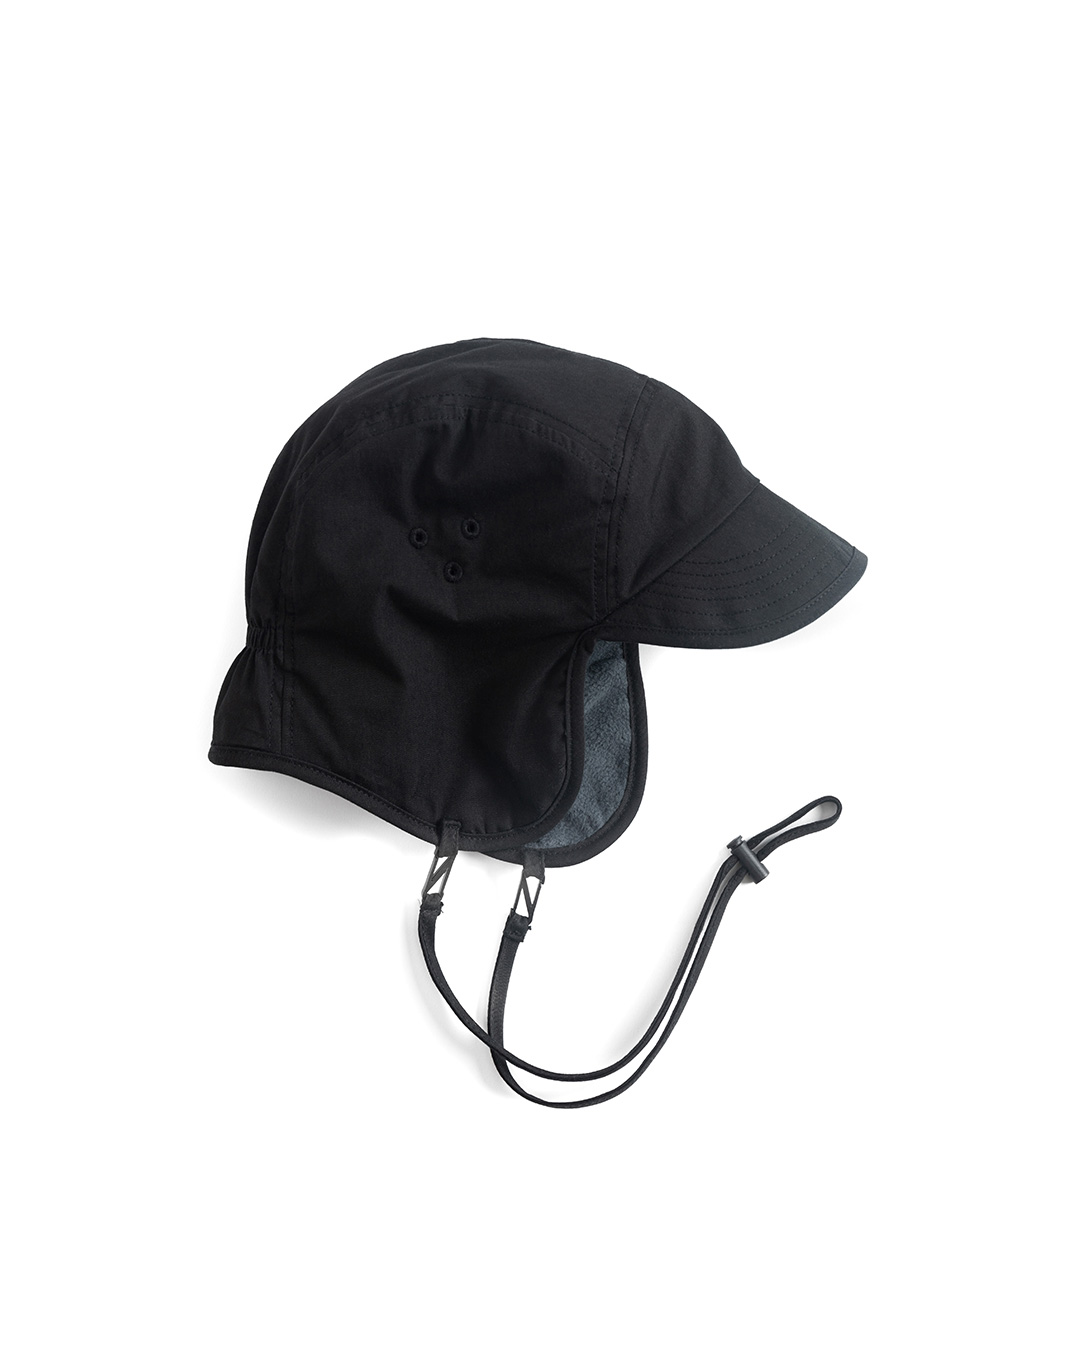 EF FIELD CAP (black)